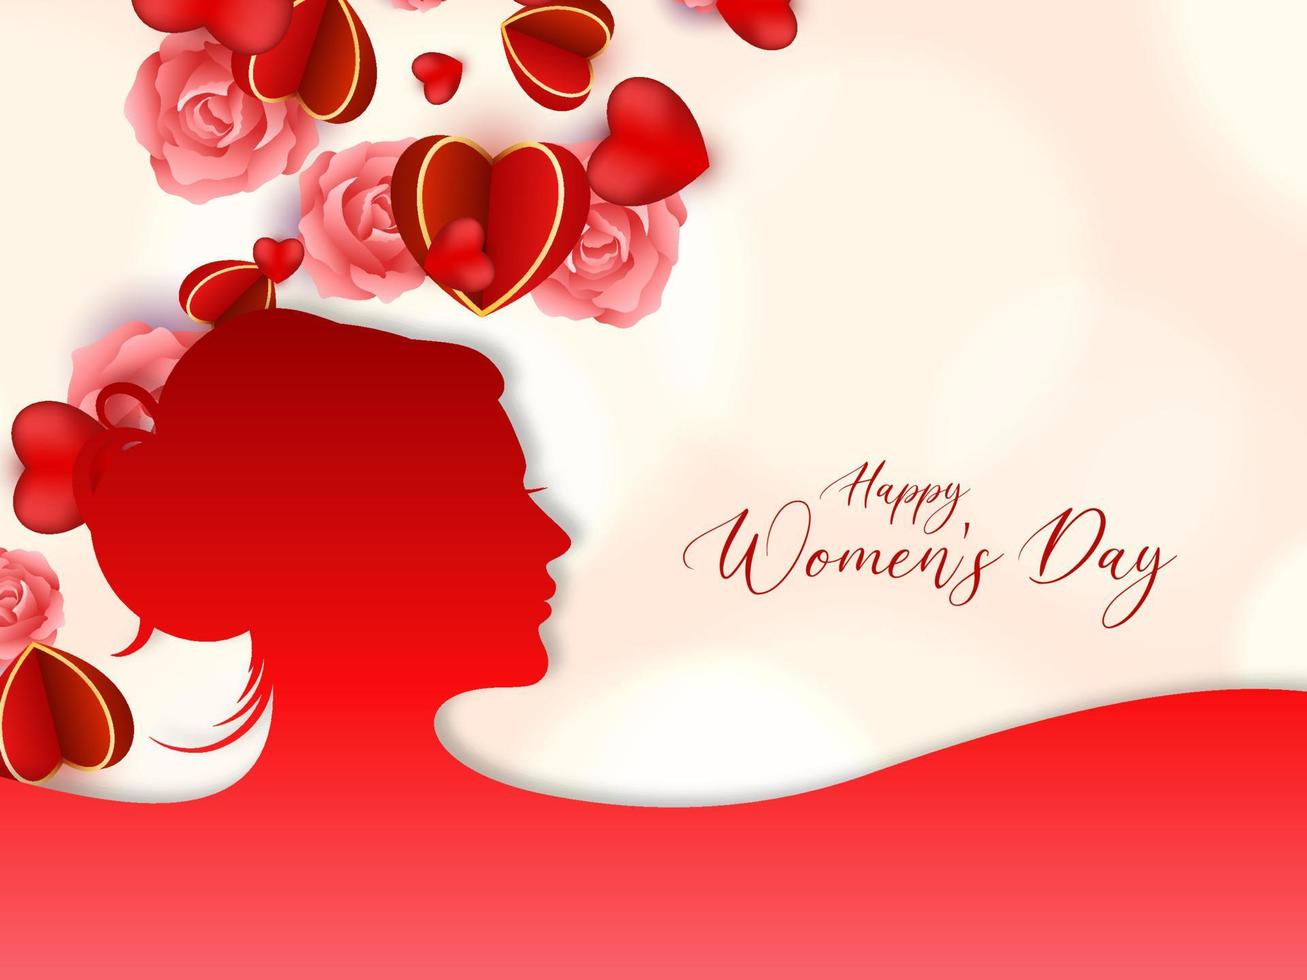 Happy Women's Day festival 8 march background design vector